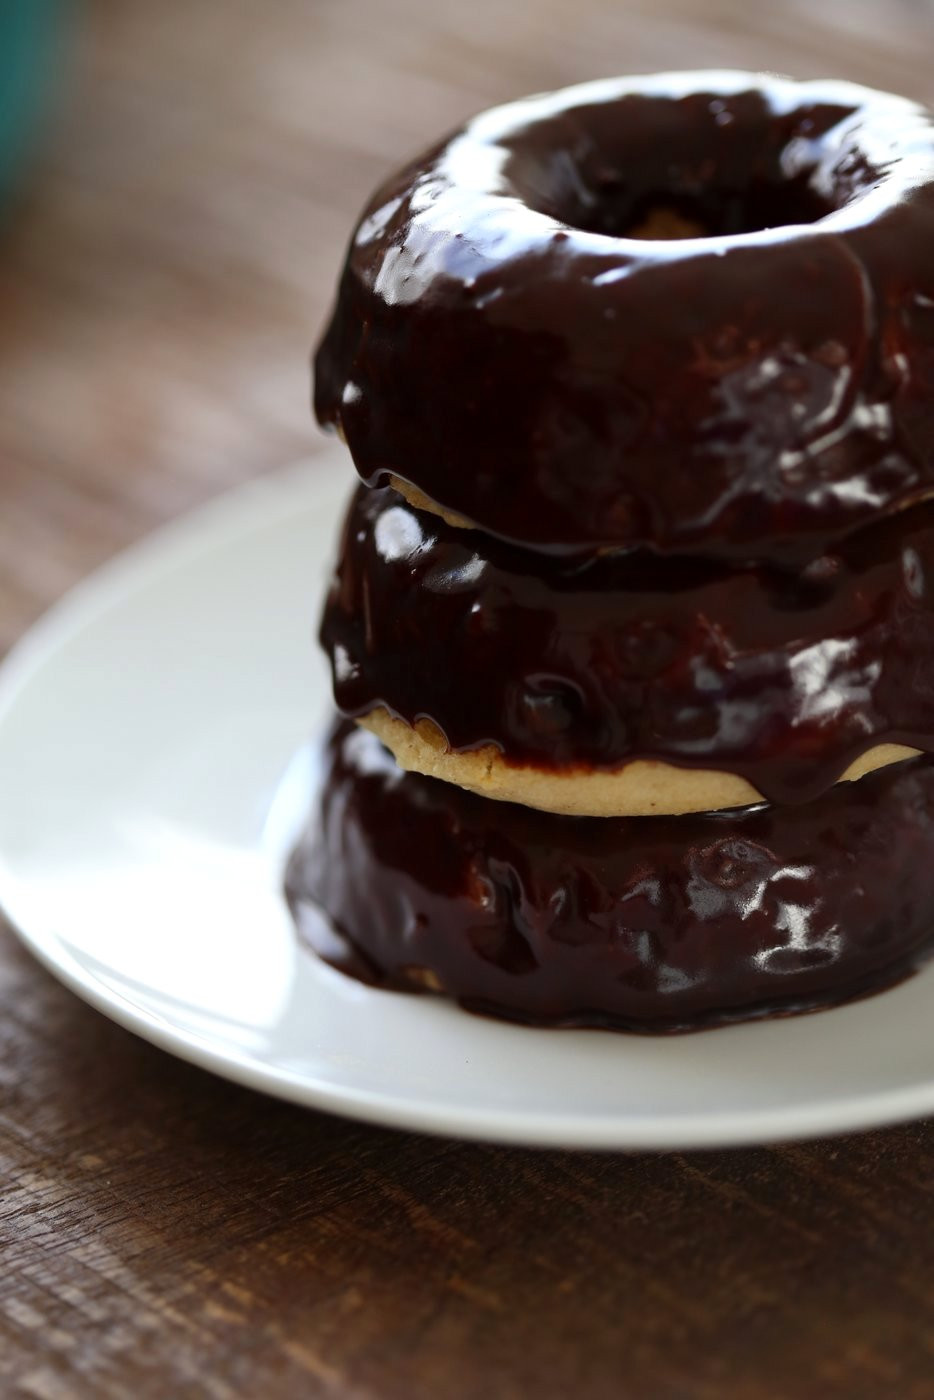 Easy Vegan Donut Recipe
 Vegan Donuts Recipe with Chocolate Glaze 1 Bowl Baked